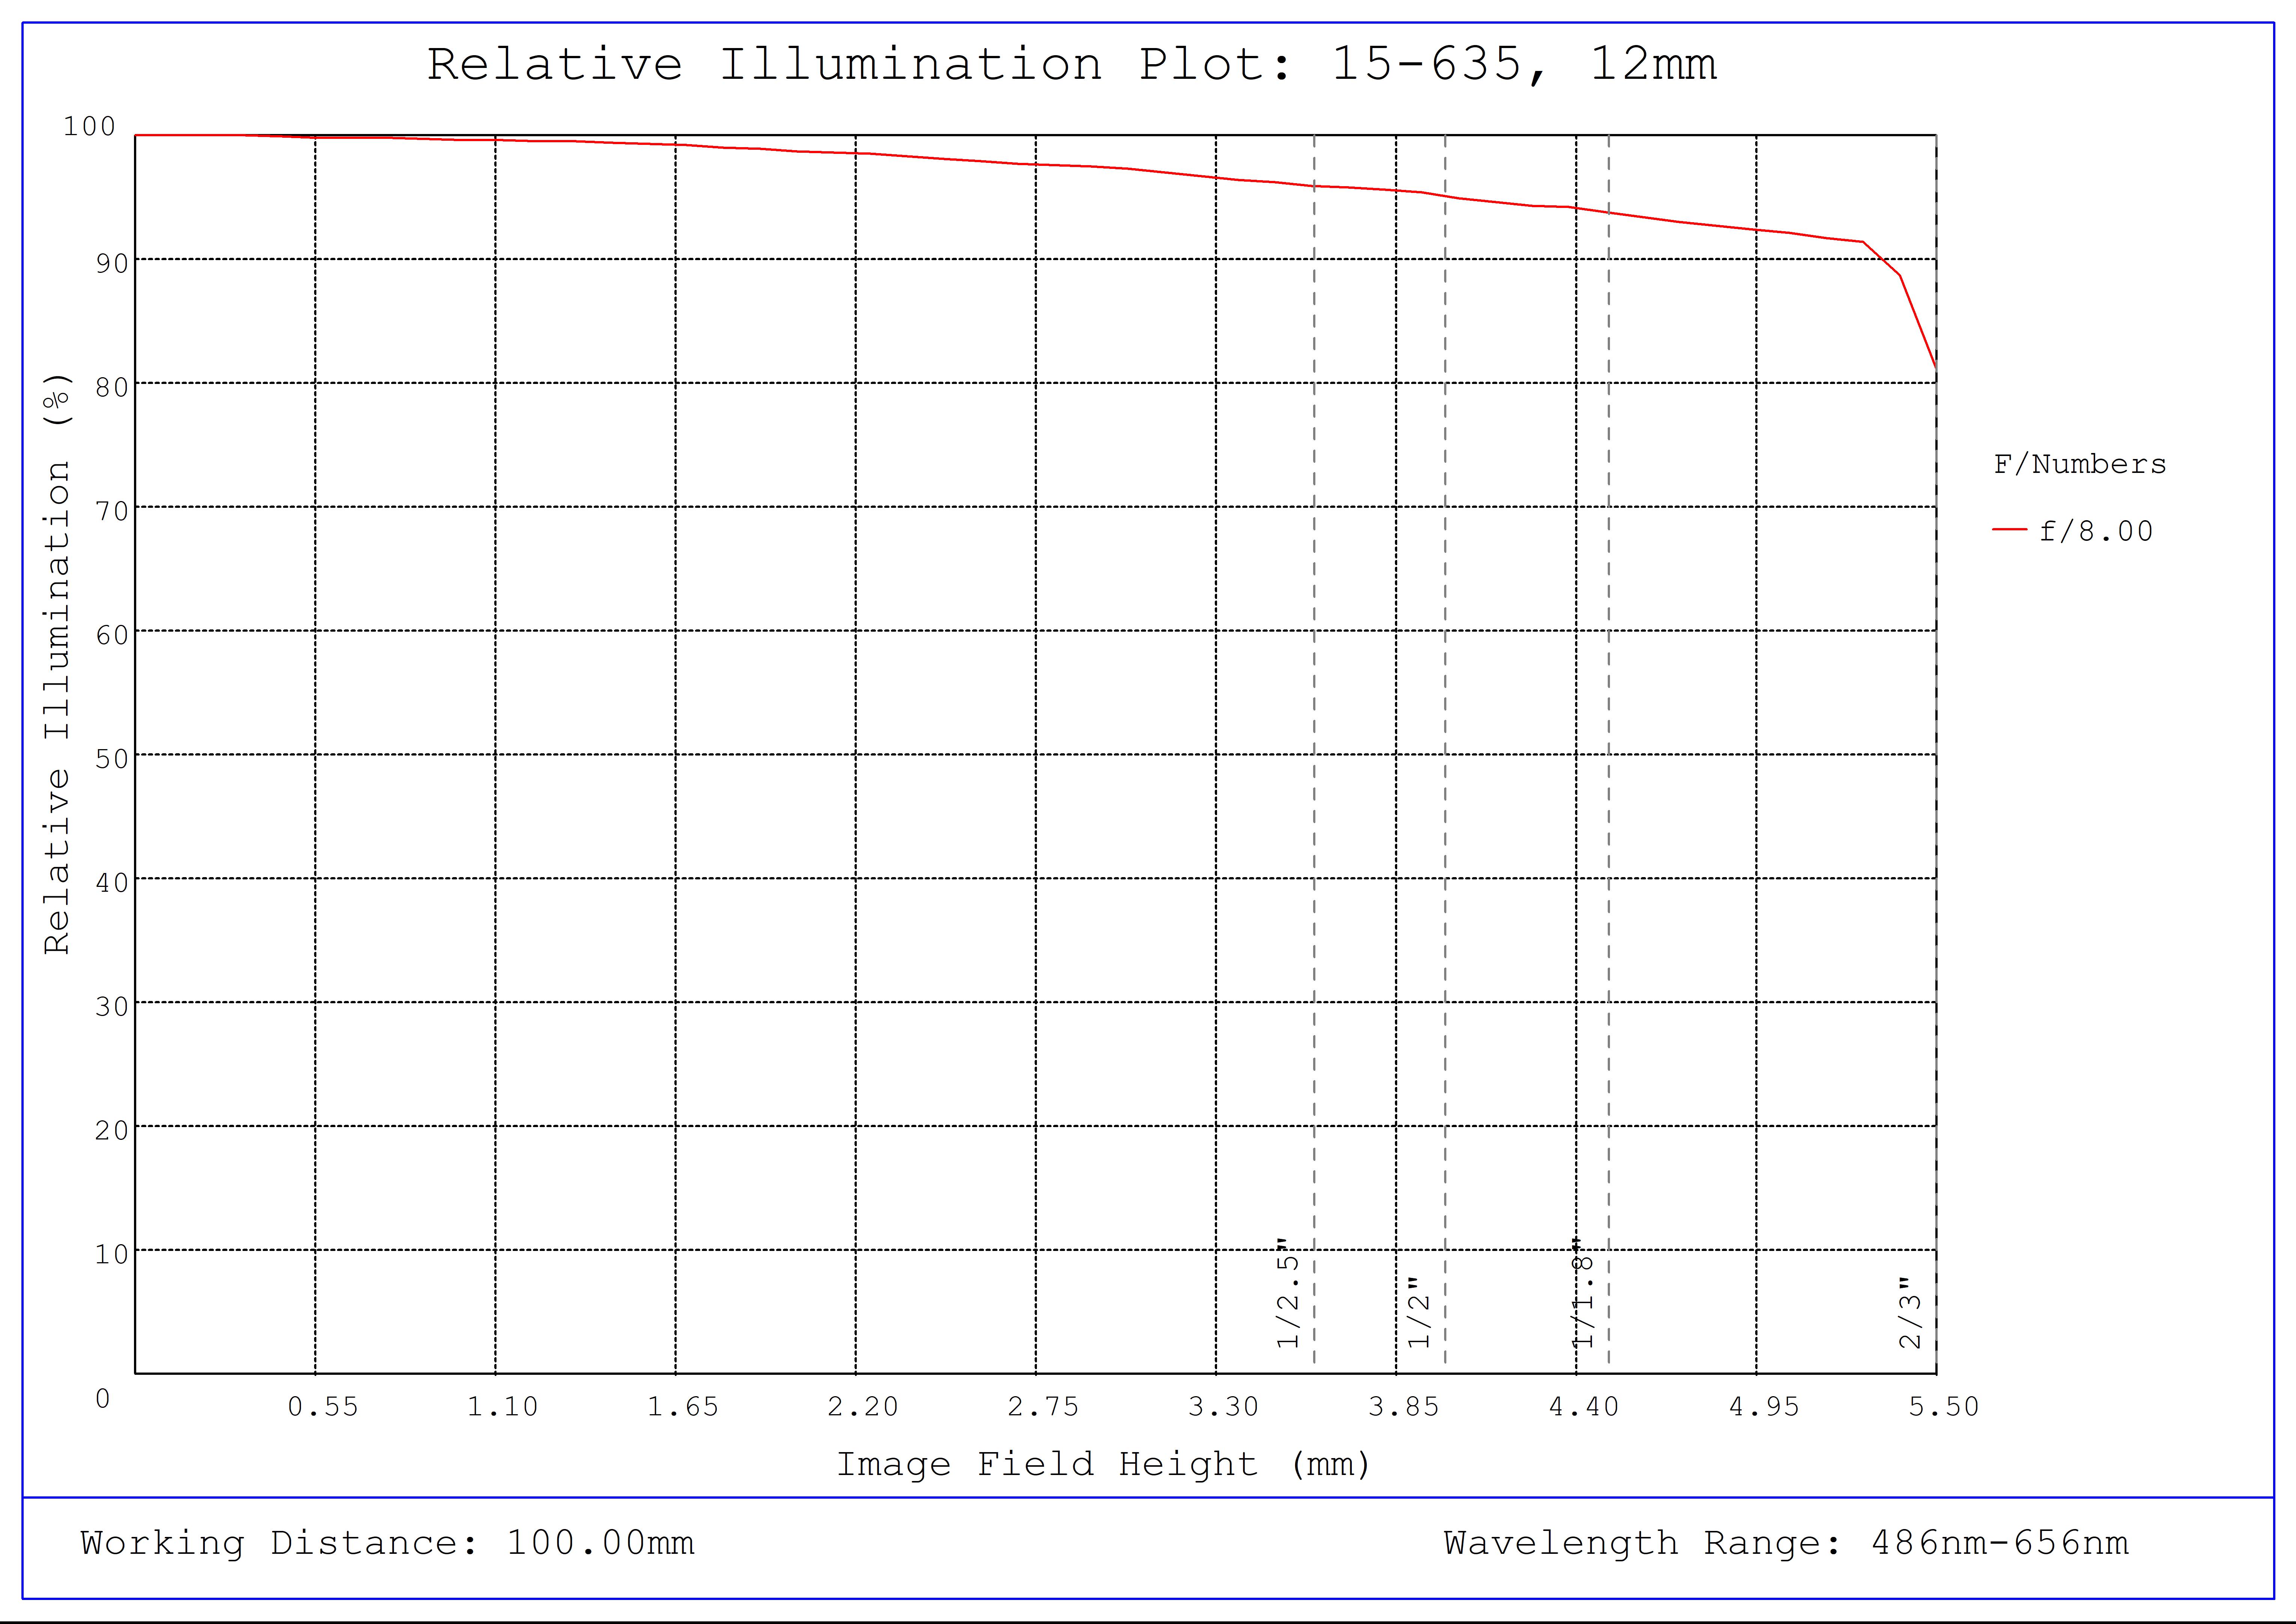 #15-635, 12mm, f/8 Cw Series Fixed Focal Length Lens, Relative Illumination Plot